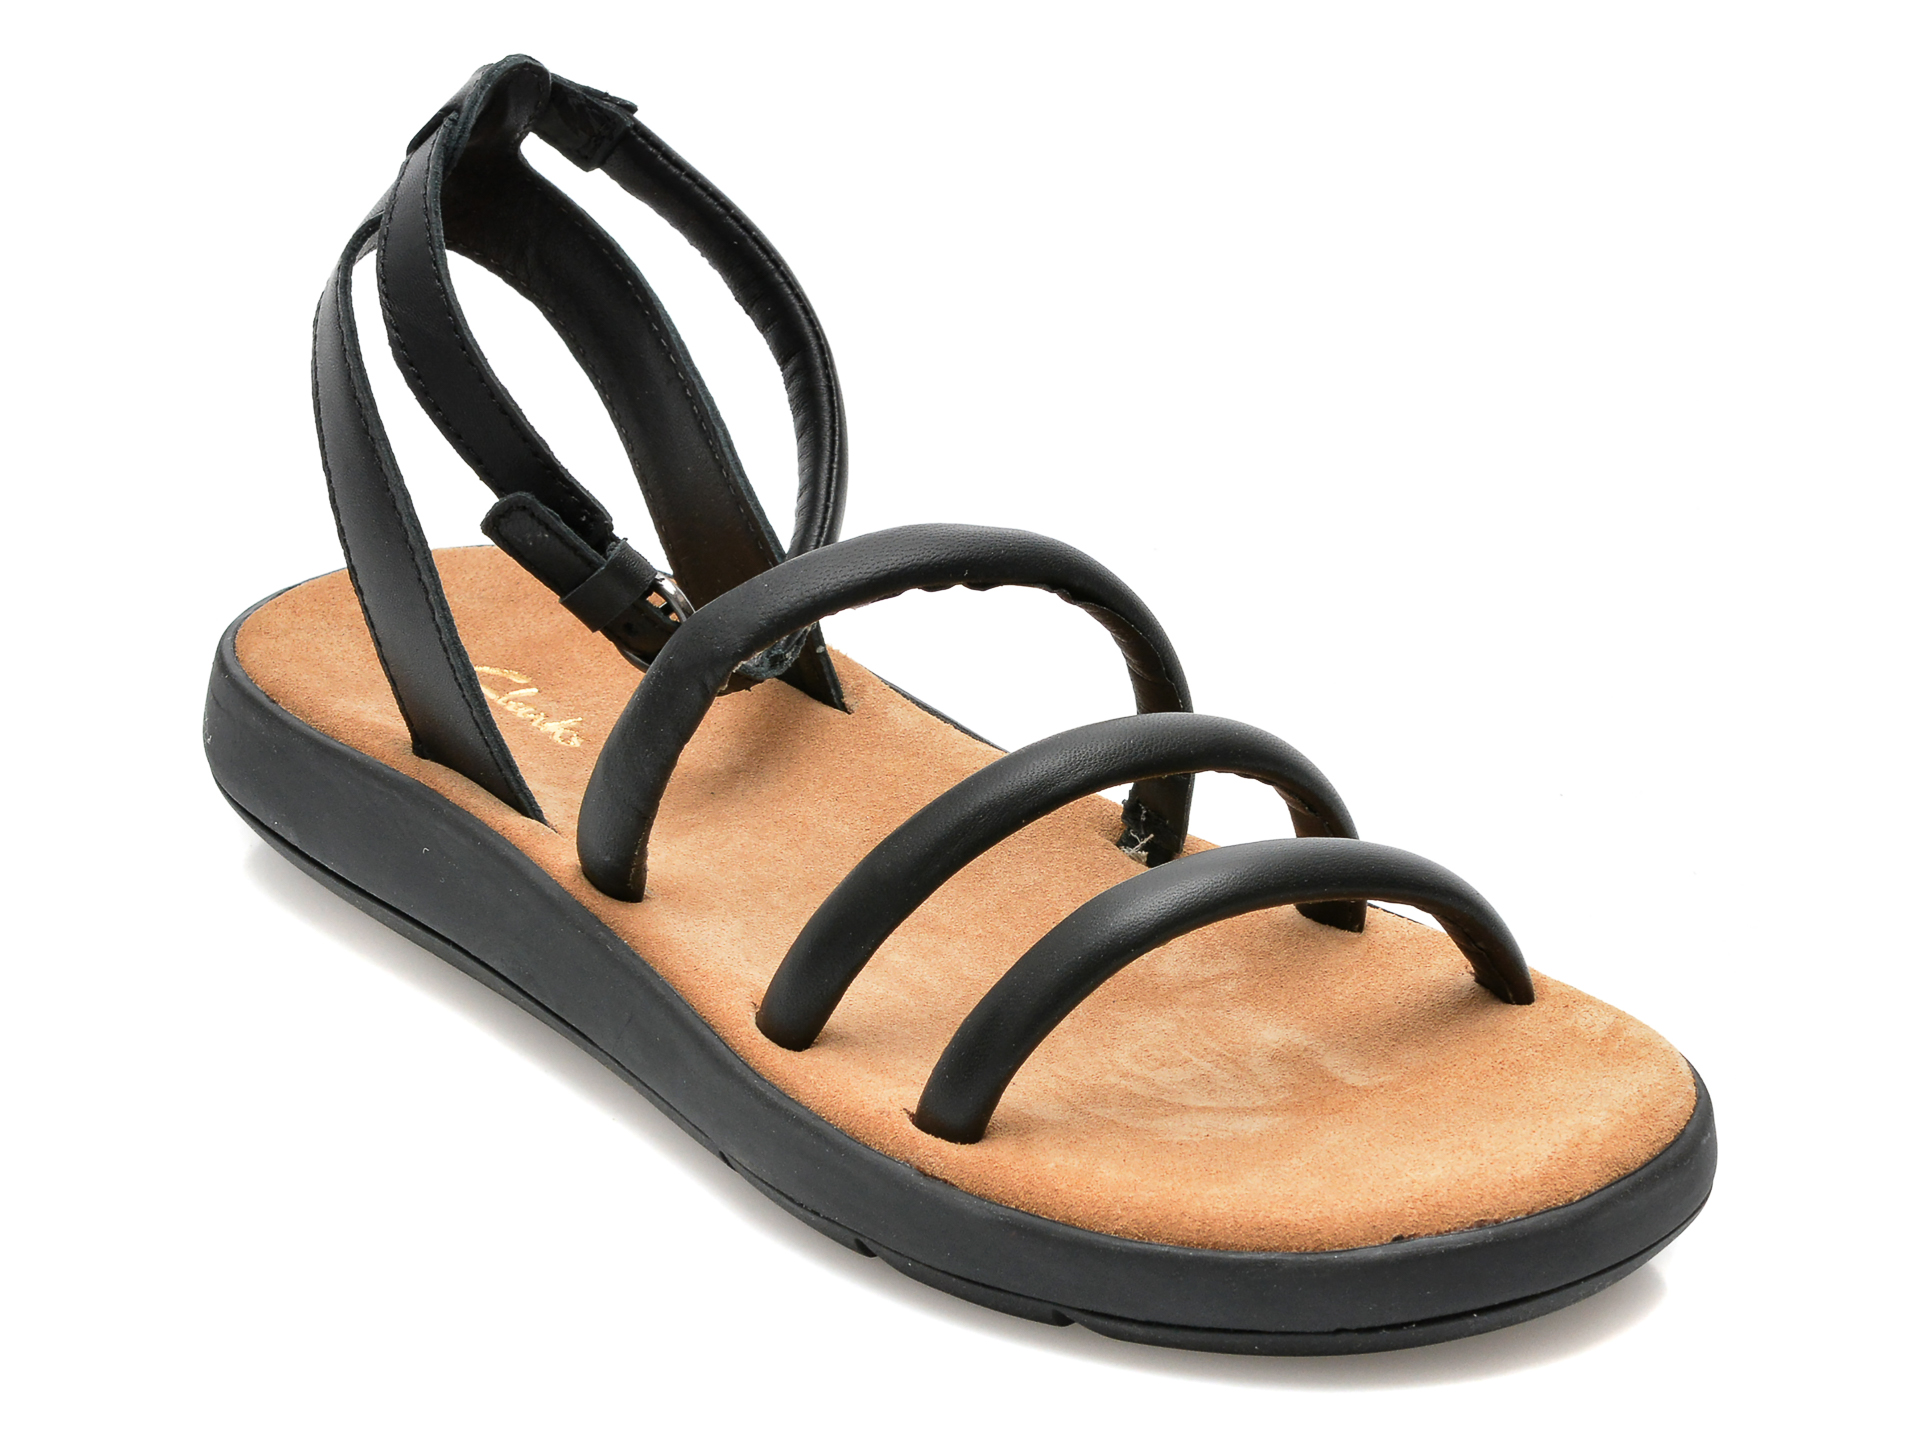 Sandale CLARKS negre, JEMSSTY, din piele naturala Clarks